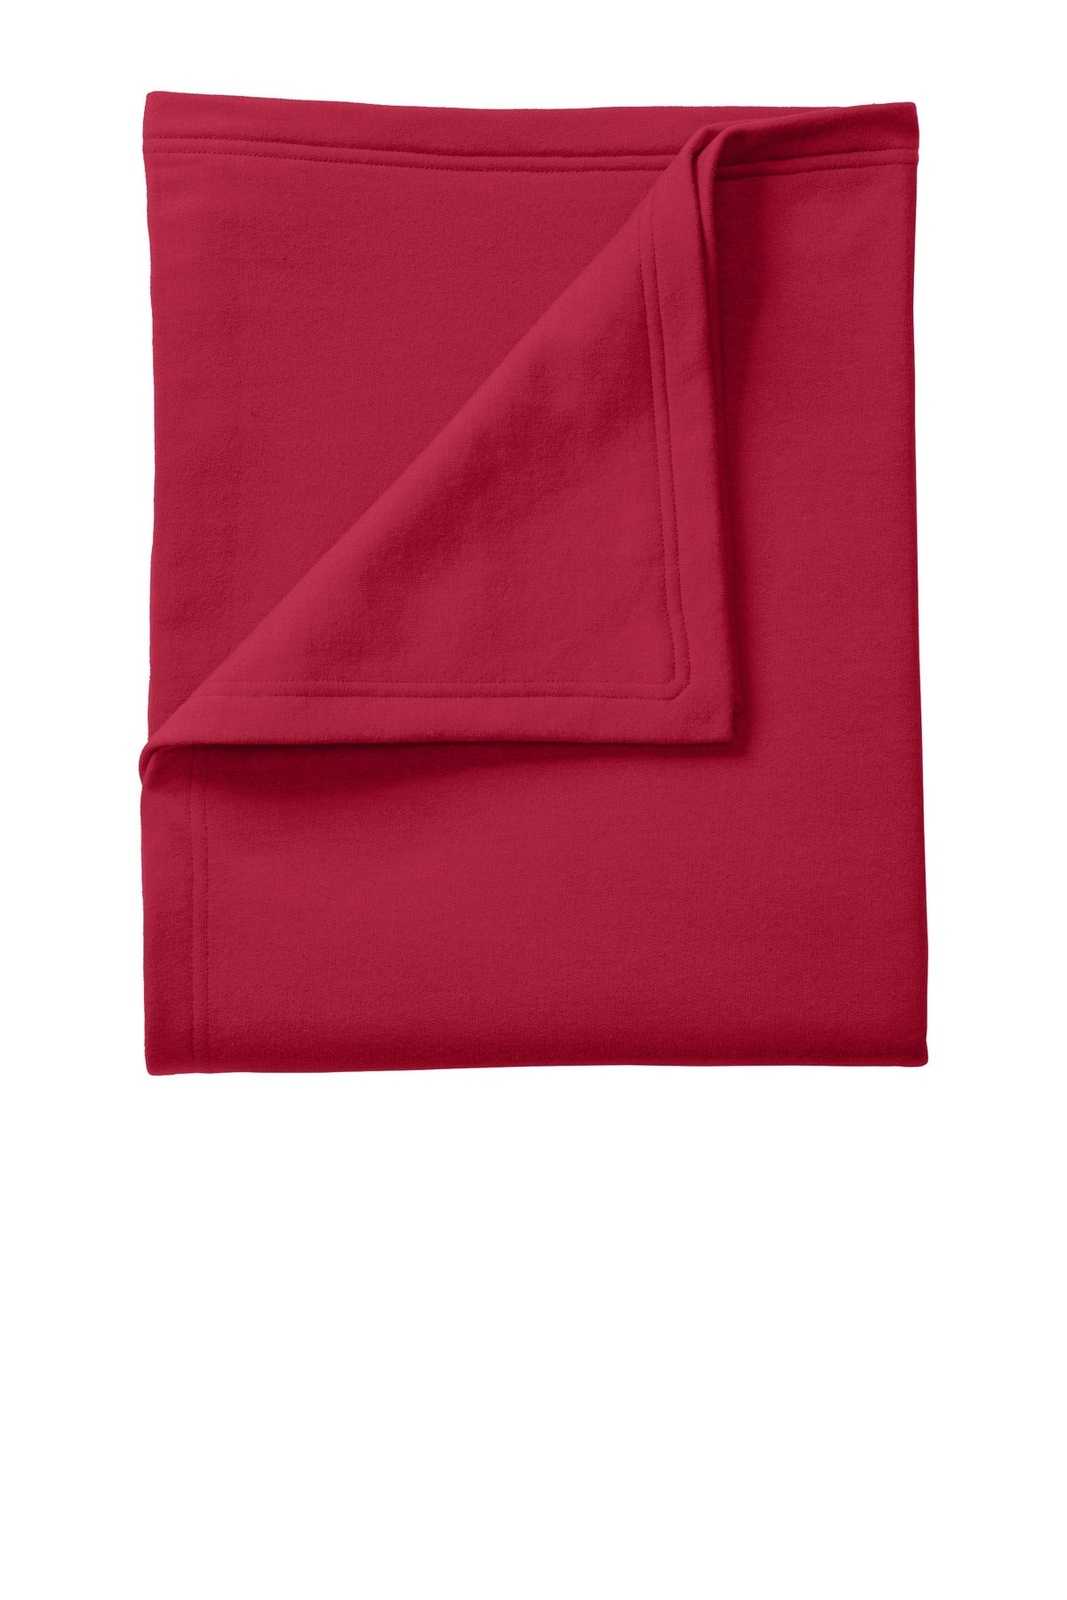 Port &amp; Company BP78 Core Fleece Sweatshirt Blanket - Red - HIT a Double - 1